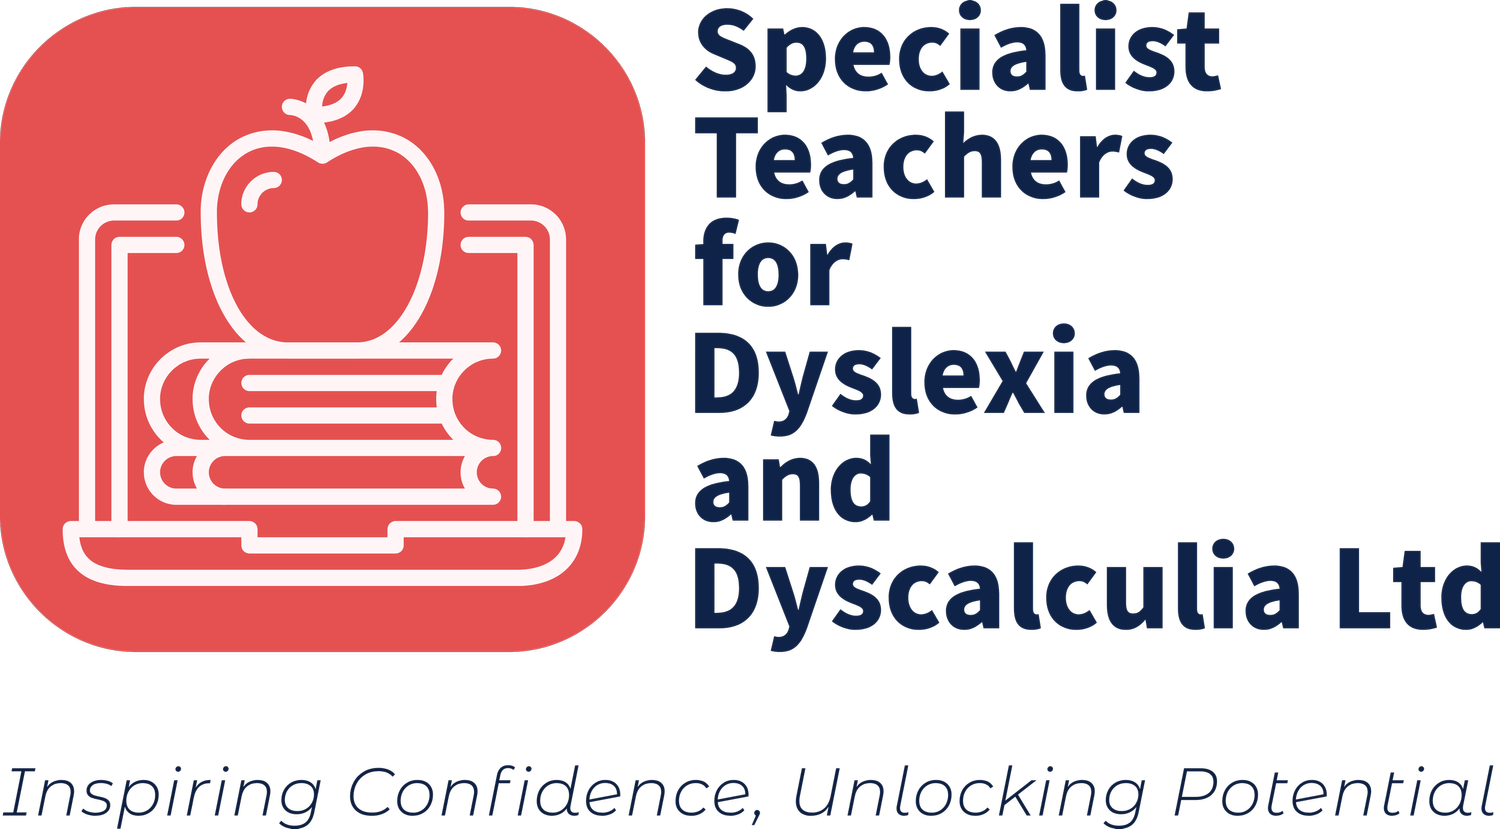 Specialist Teachers for Dyslexia and Dysalculia